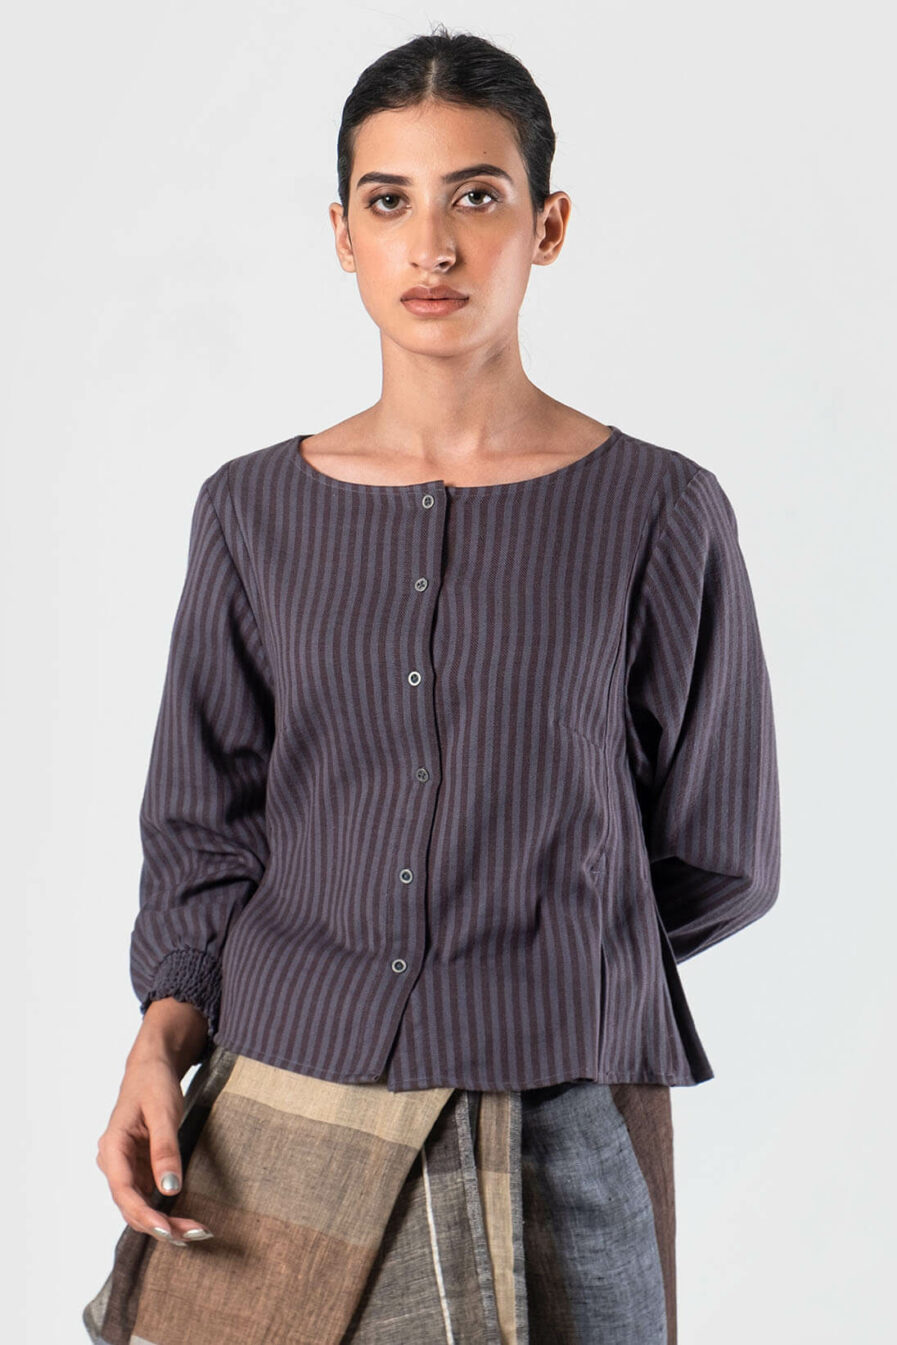 Anavila Merlot striped flanneled blouse